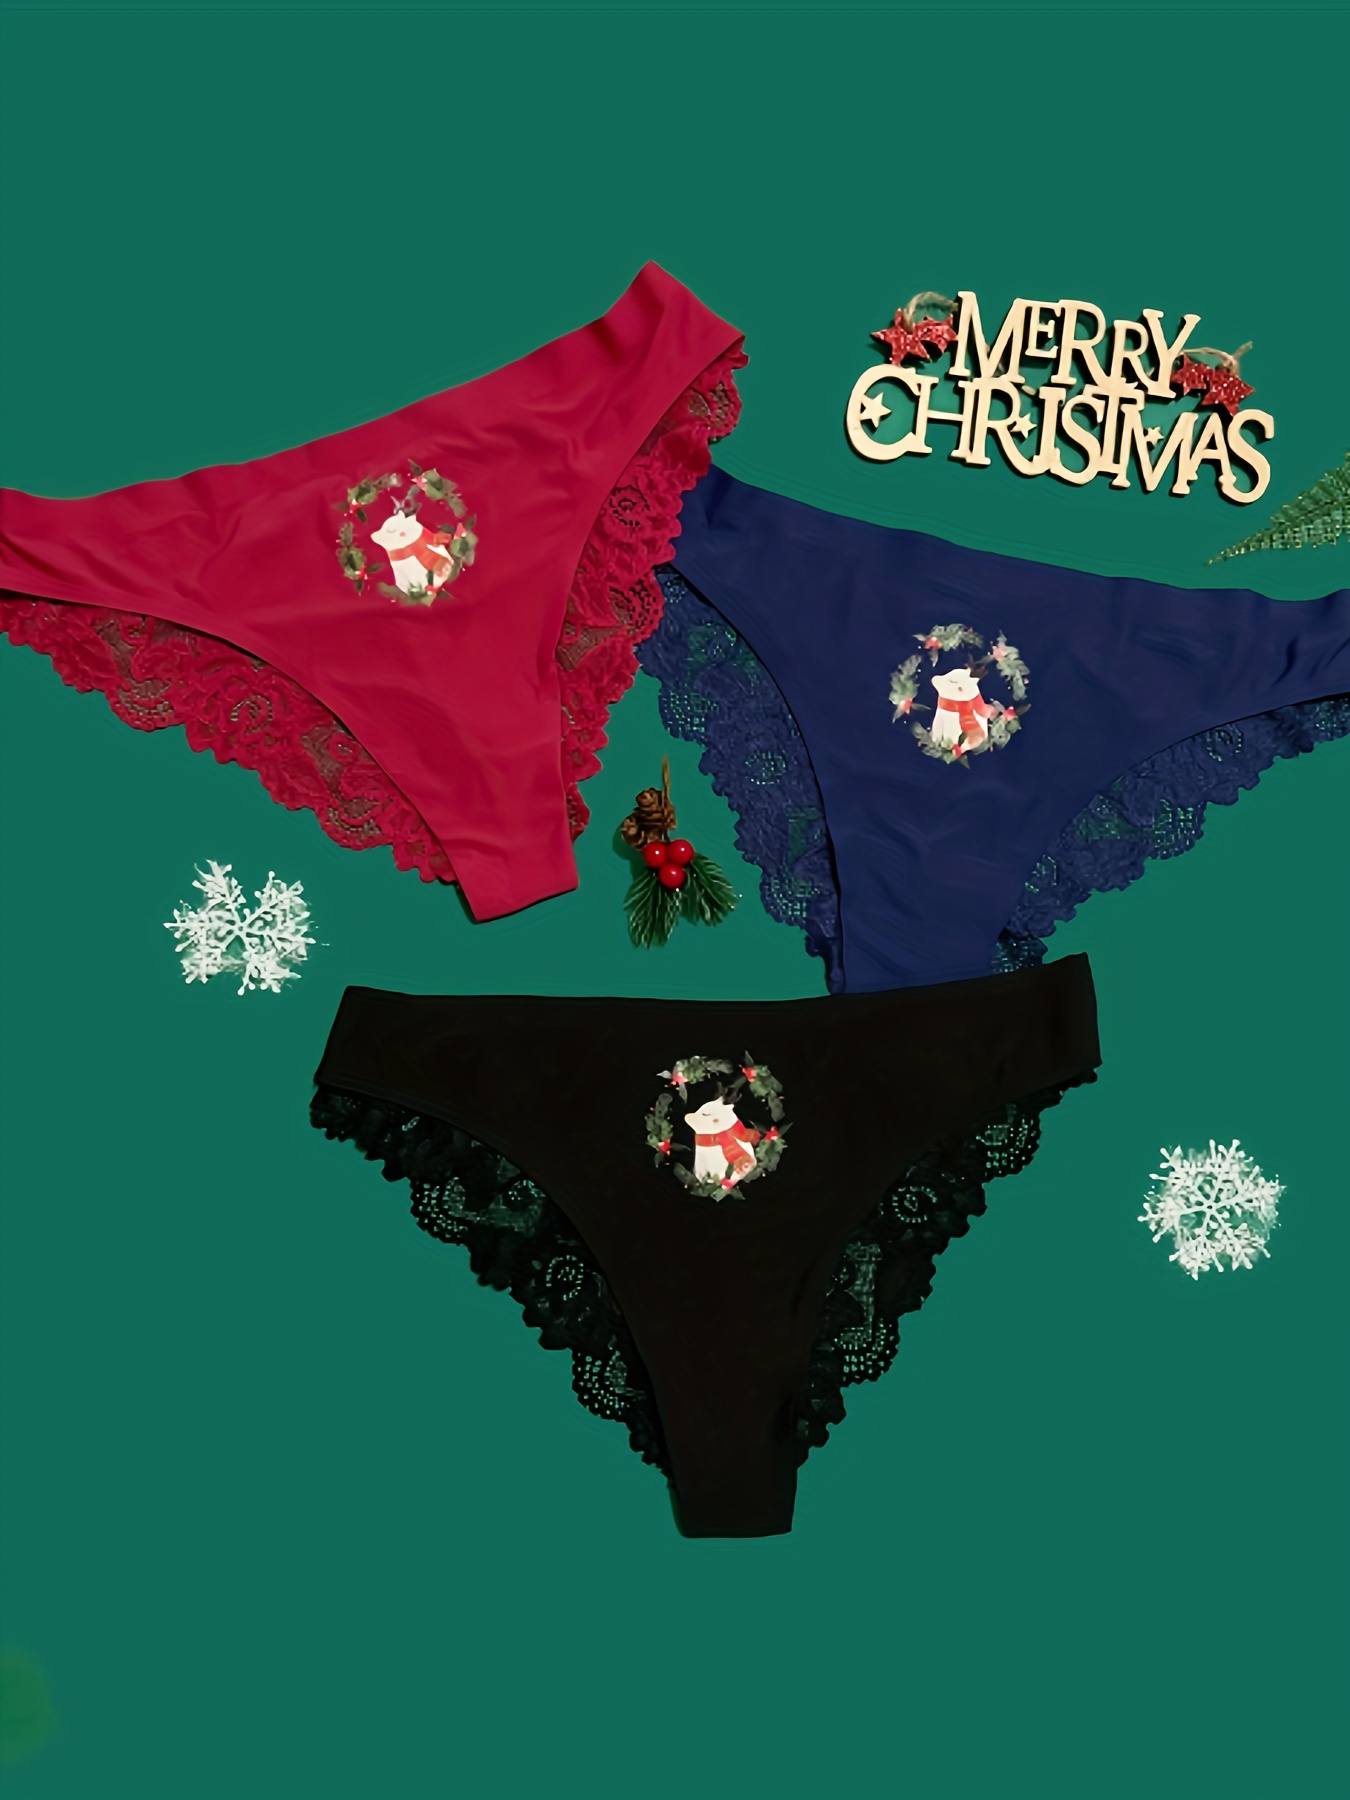 Womens Christmas Underwear, Clothing